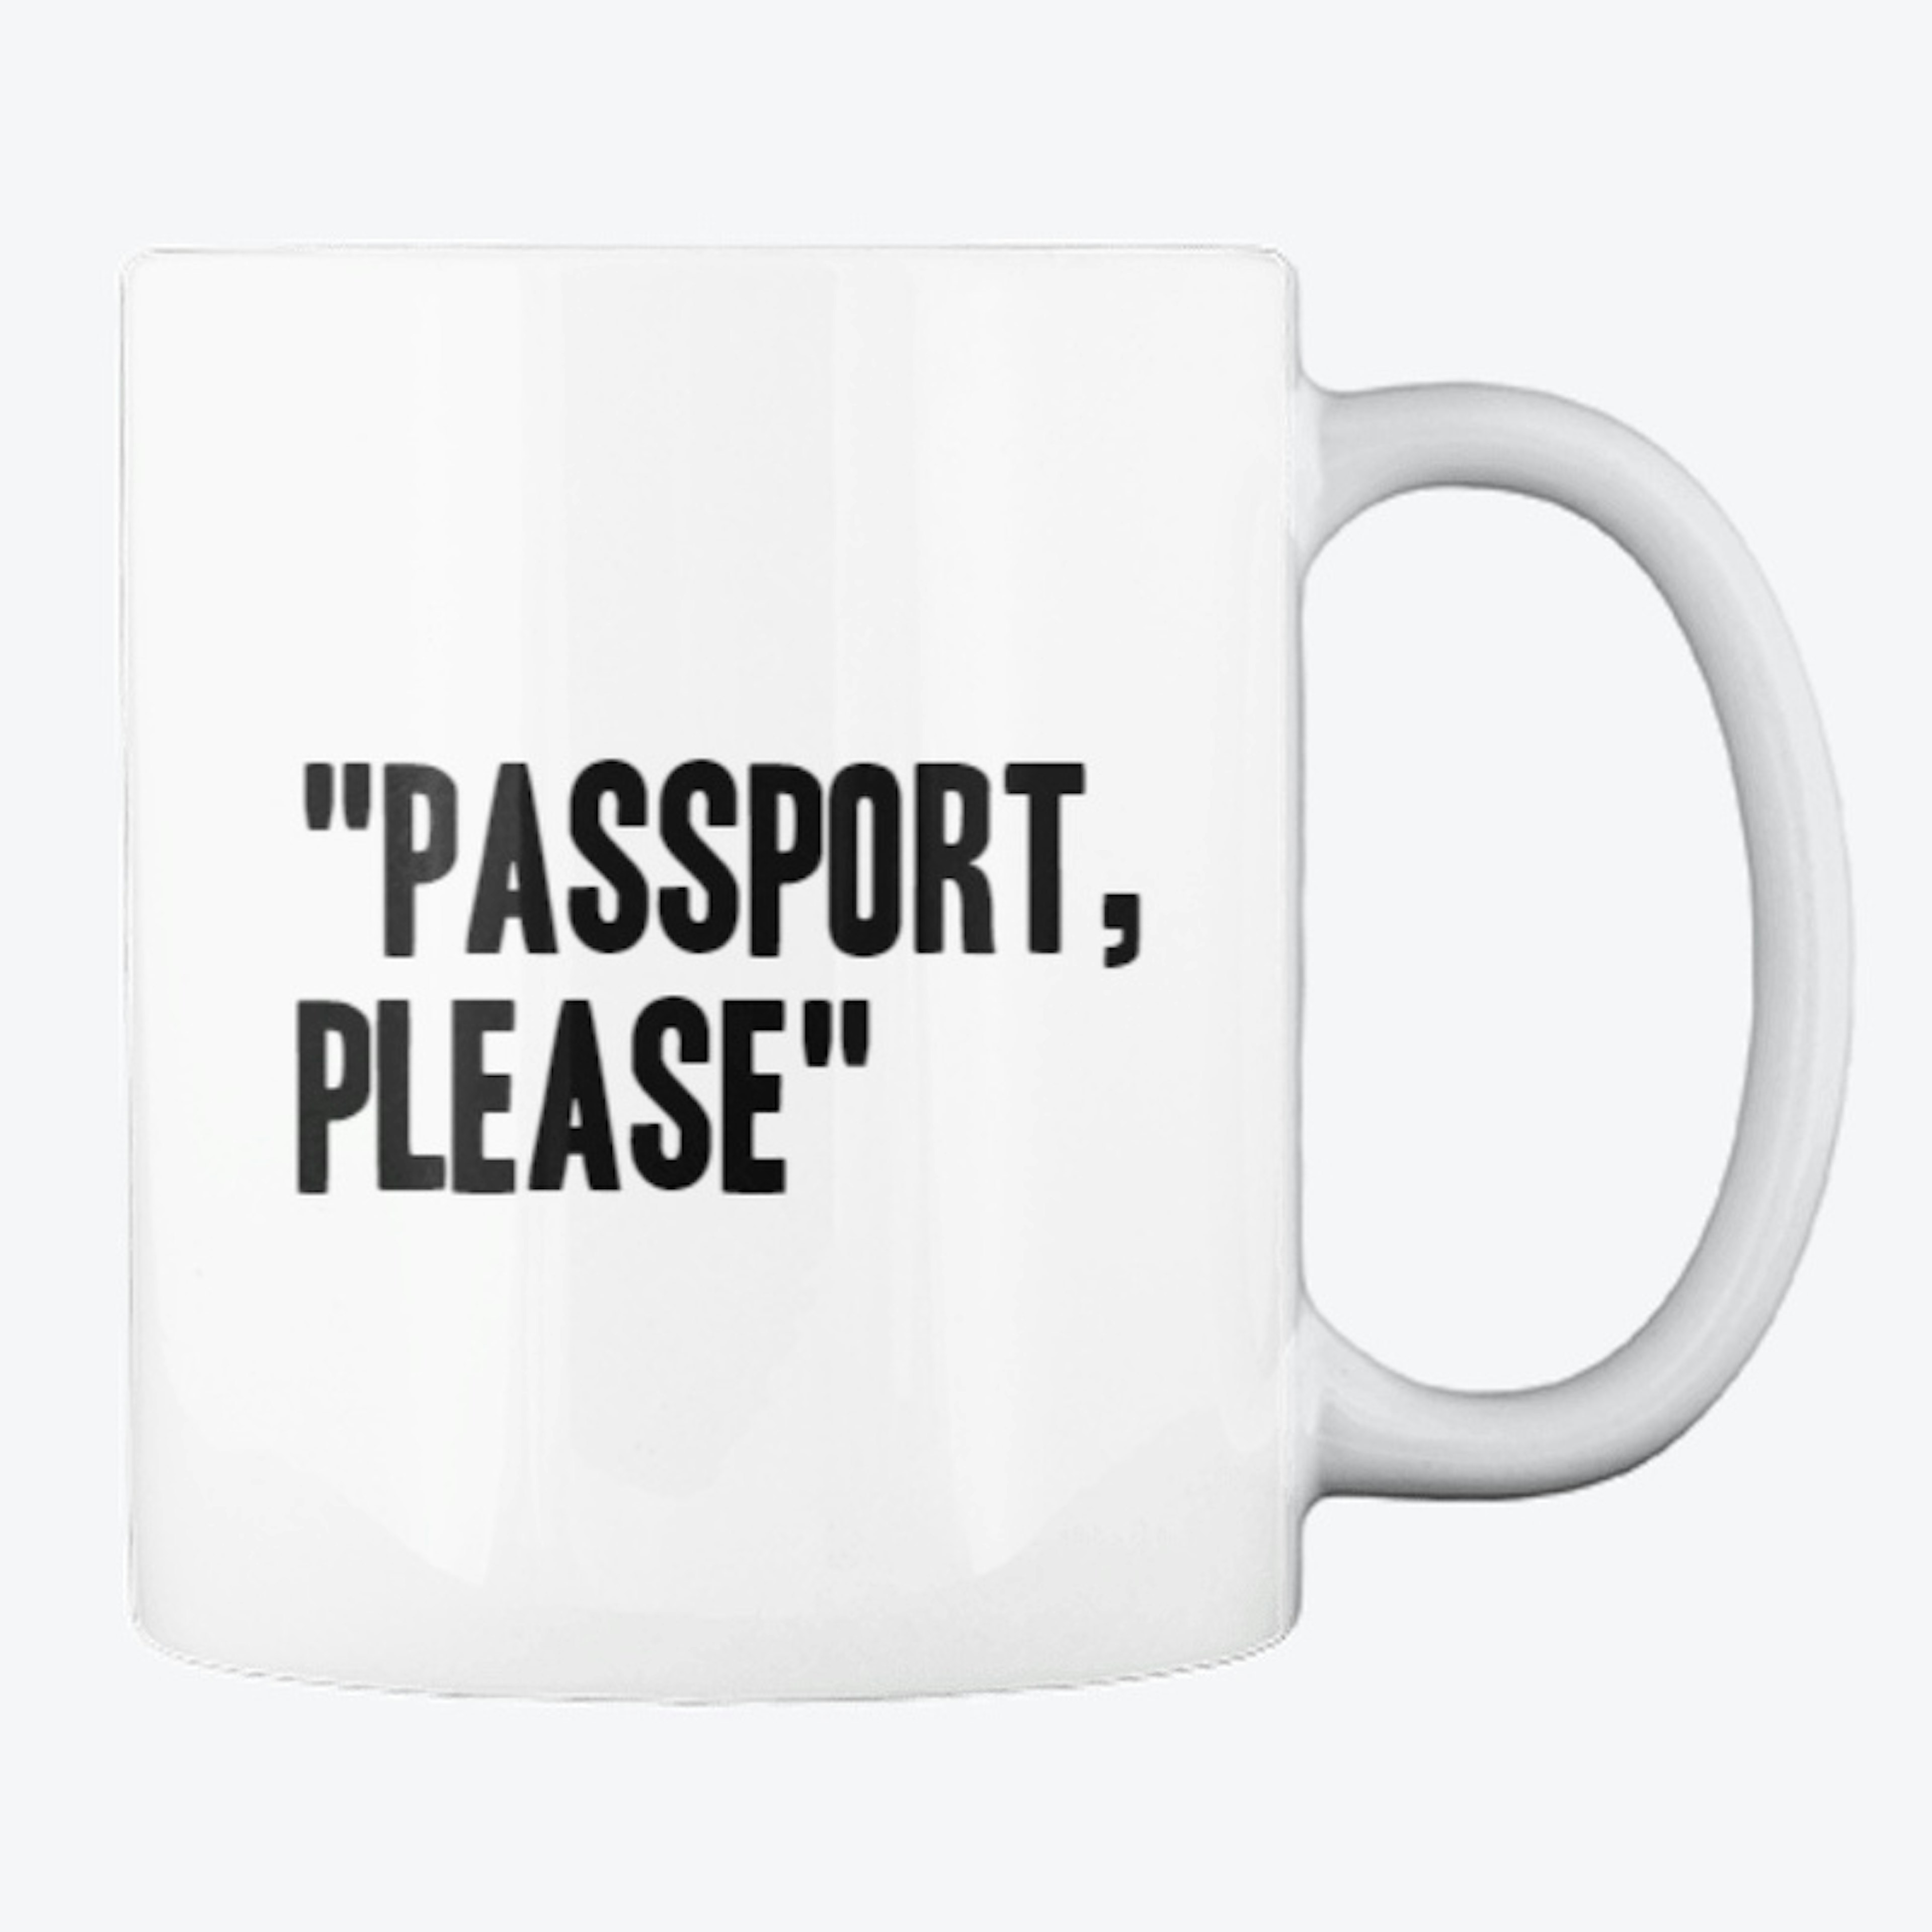 Passport, please